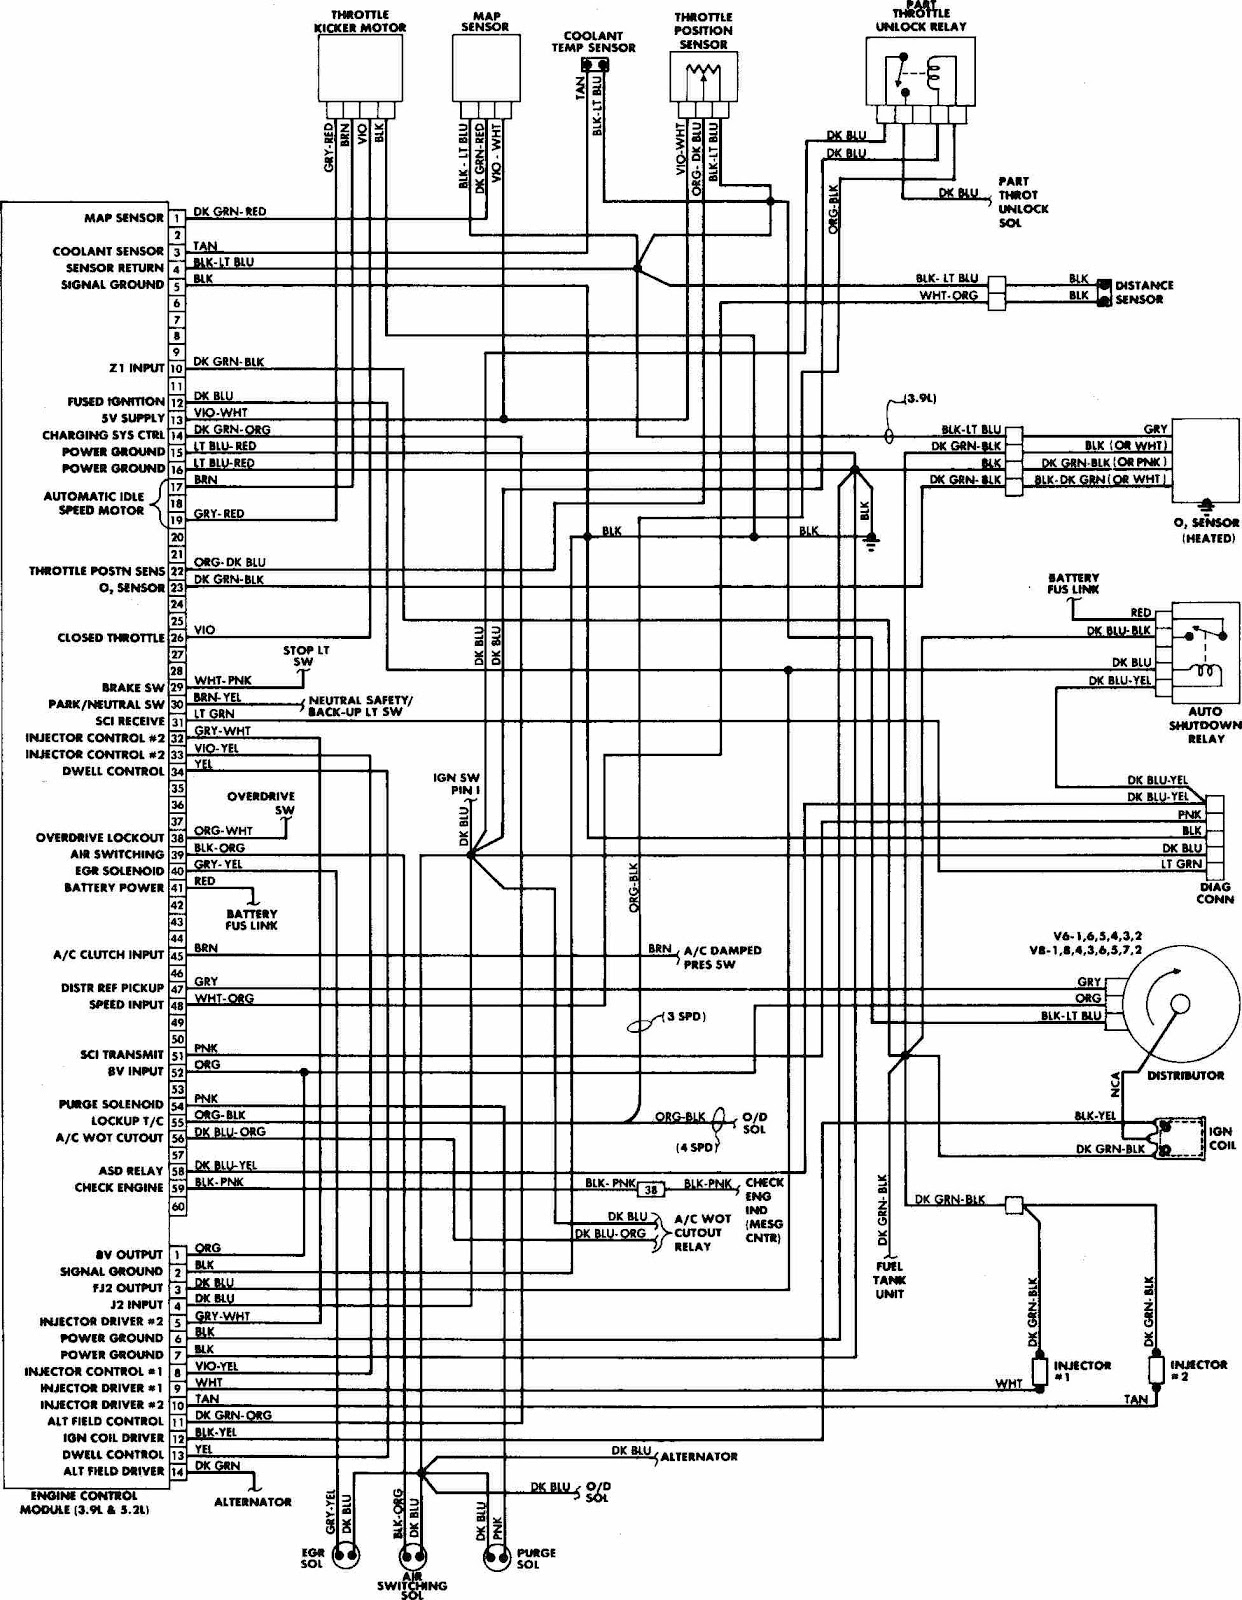 Dodge Rampage Wiring Diagrams | Wiring Diagram - Dodge Ignition Wiring Diagram